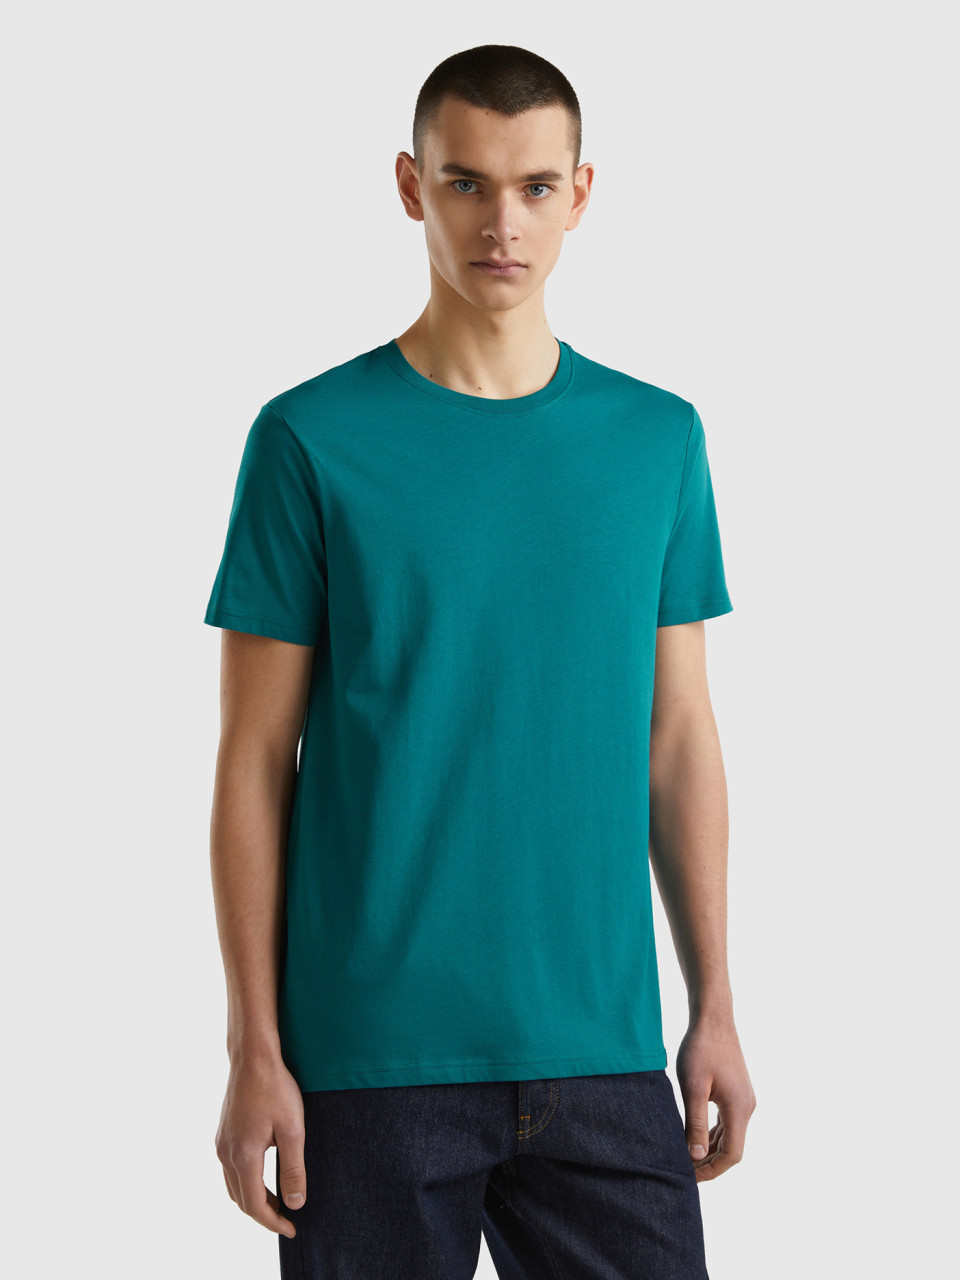 Benetton, Camiseta Verde Petróleo, Verde Petróleo, Hombre